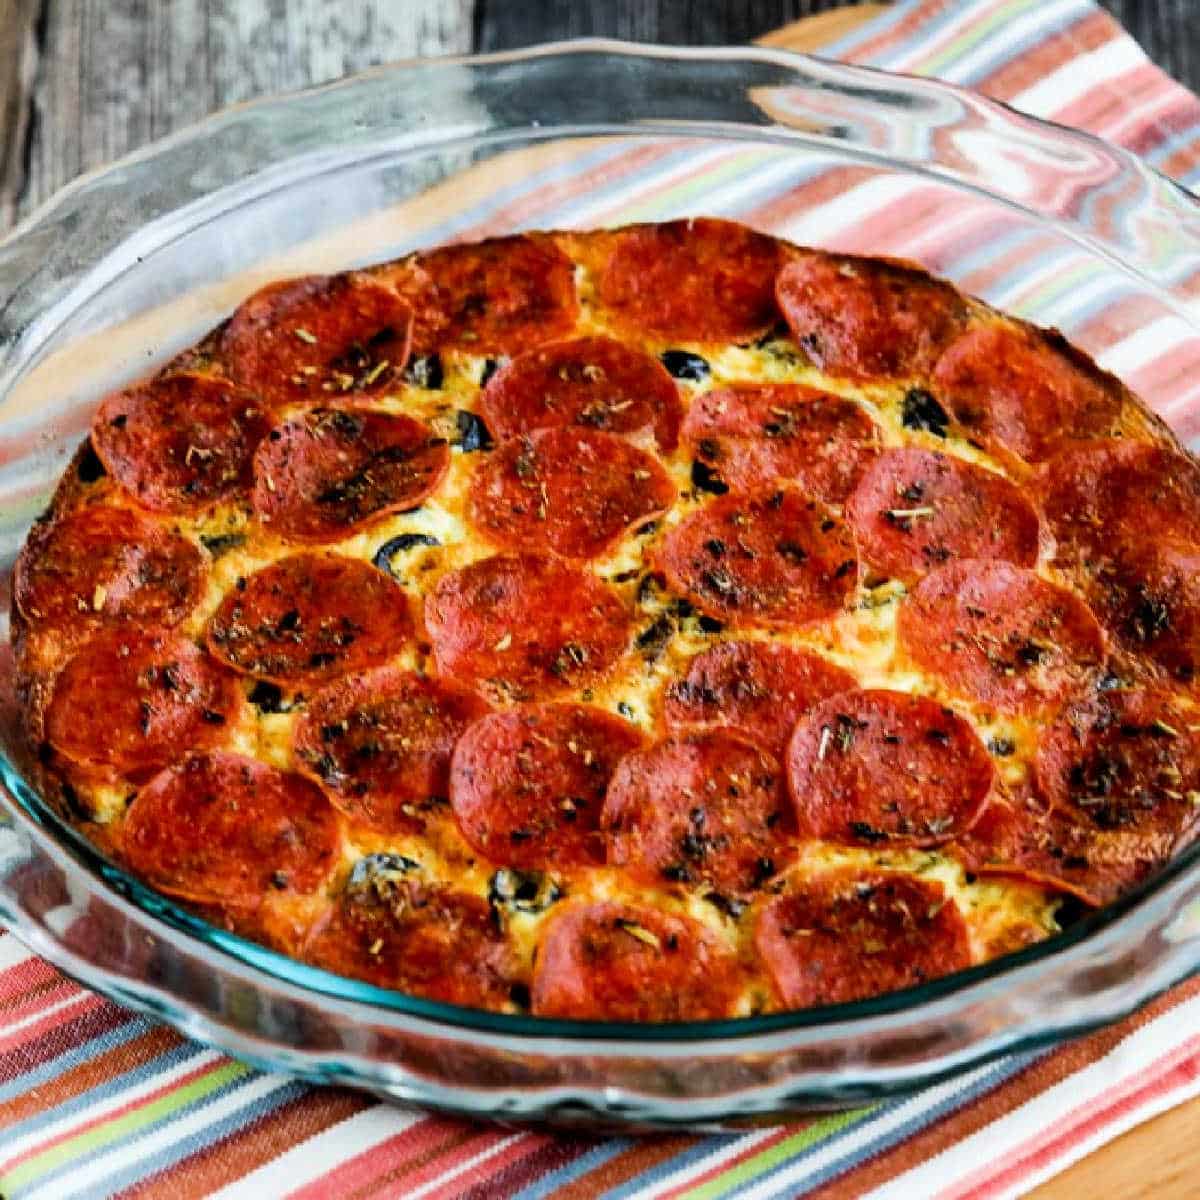 Pepperoni Pizza Keto Crustless Quiche shown in baking dish on napkin.